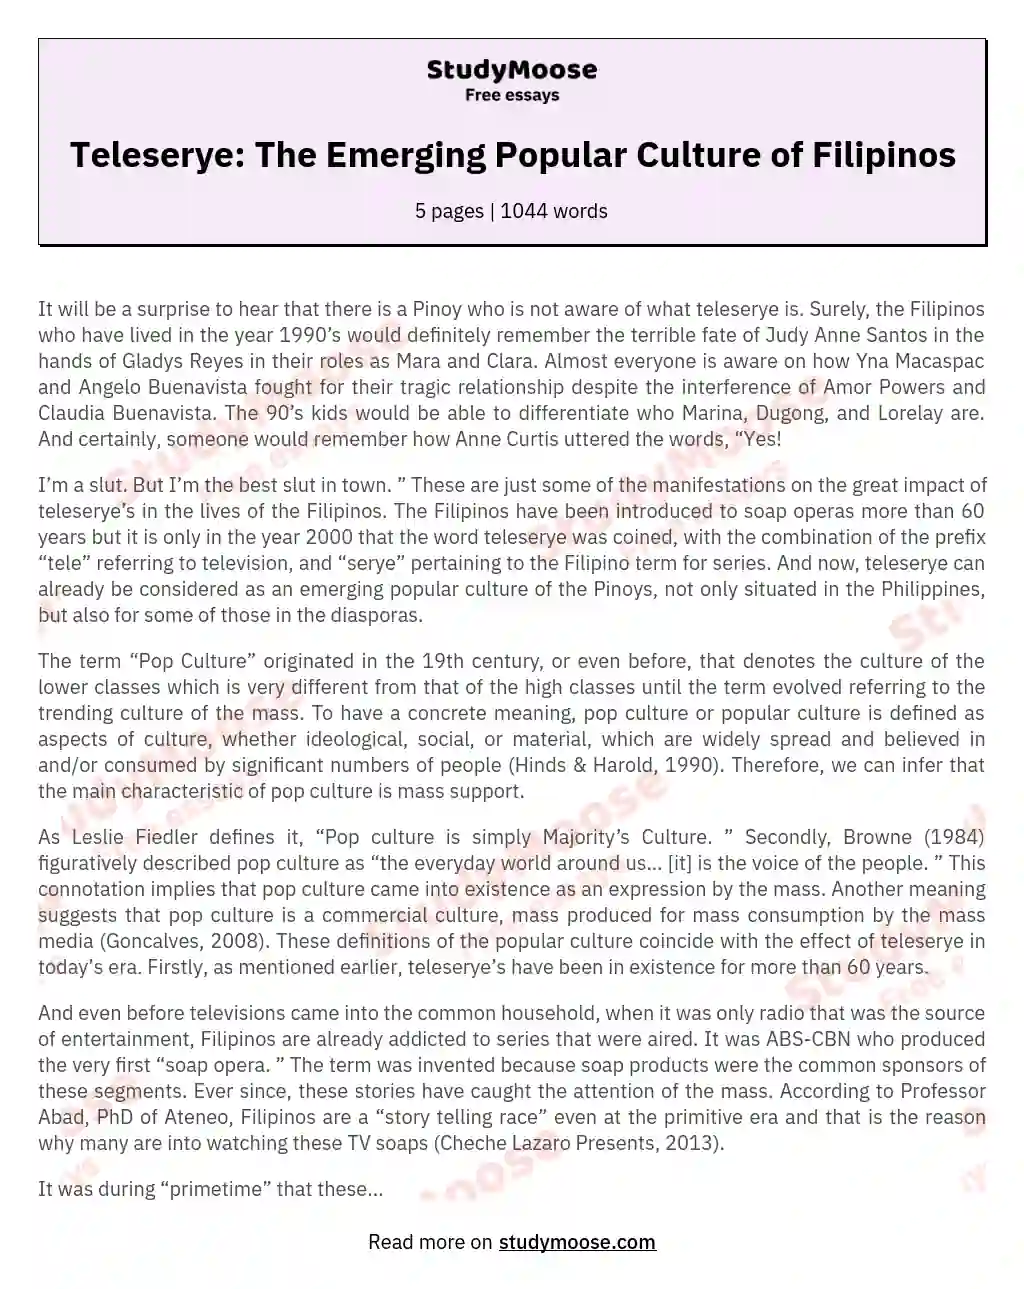 Teleserye: The Emerging Popular Culture of Filipinos essay